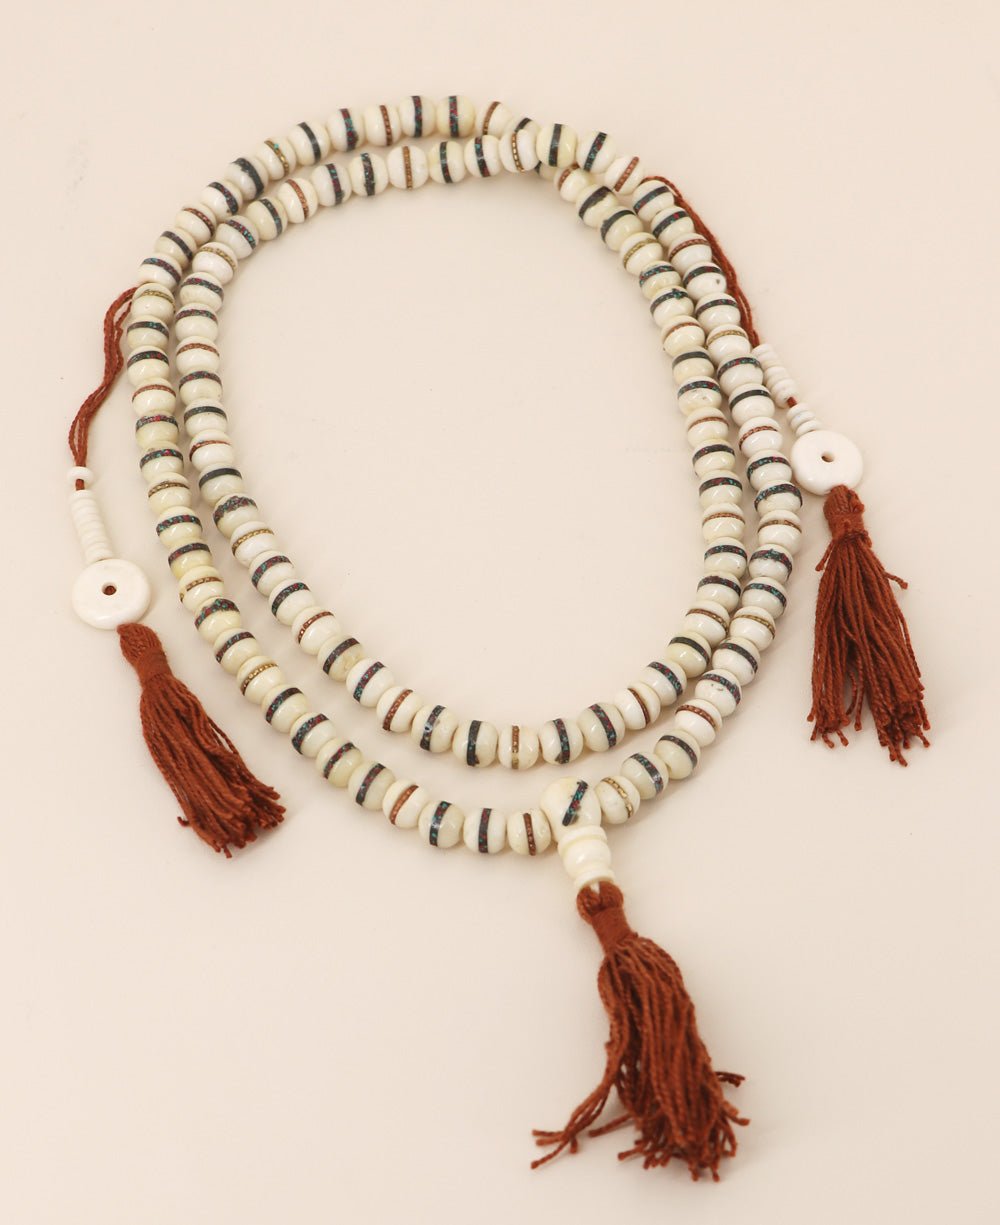 108 Beads Meditation Mala with Counters, Bone Inlay - Prayer Beads